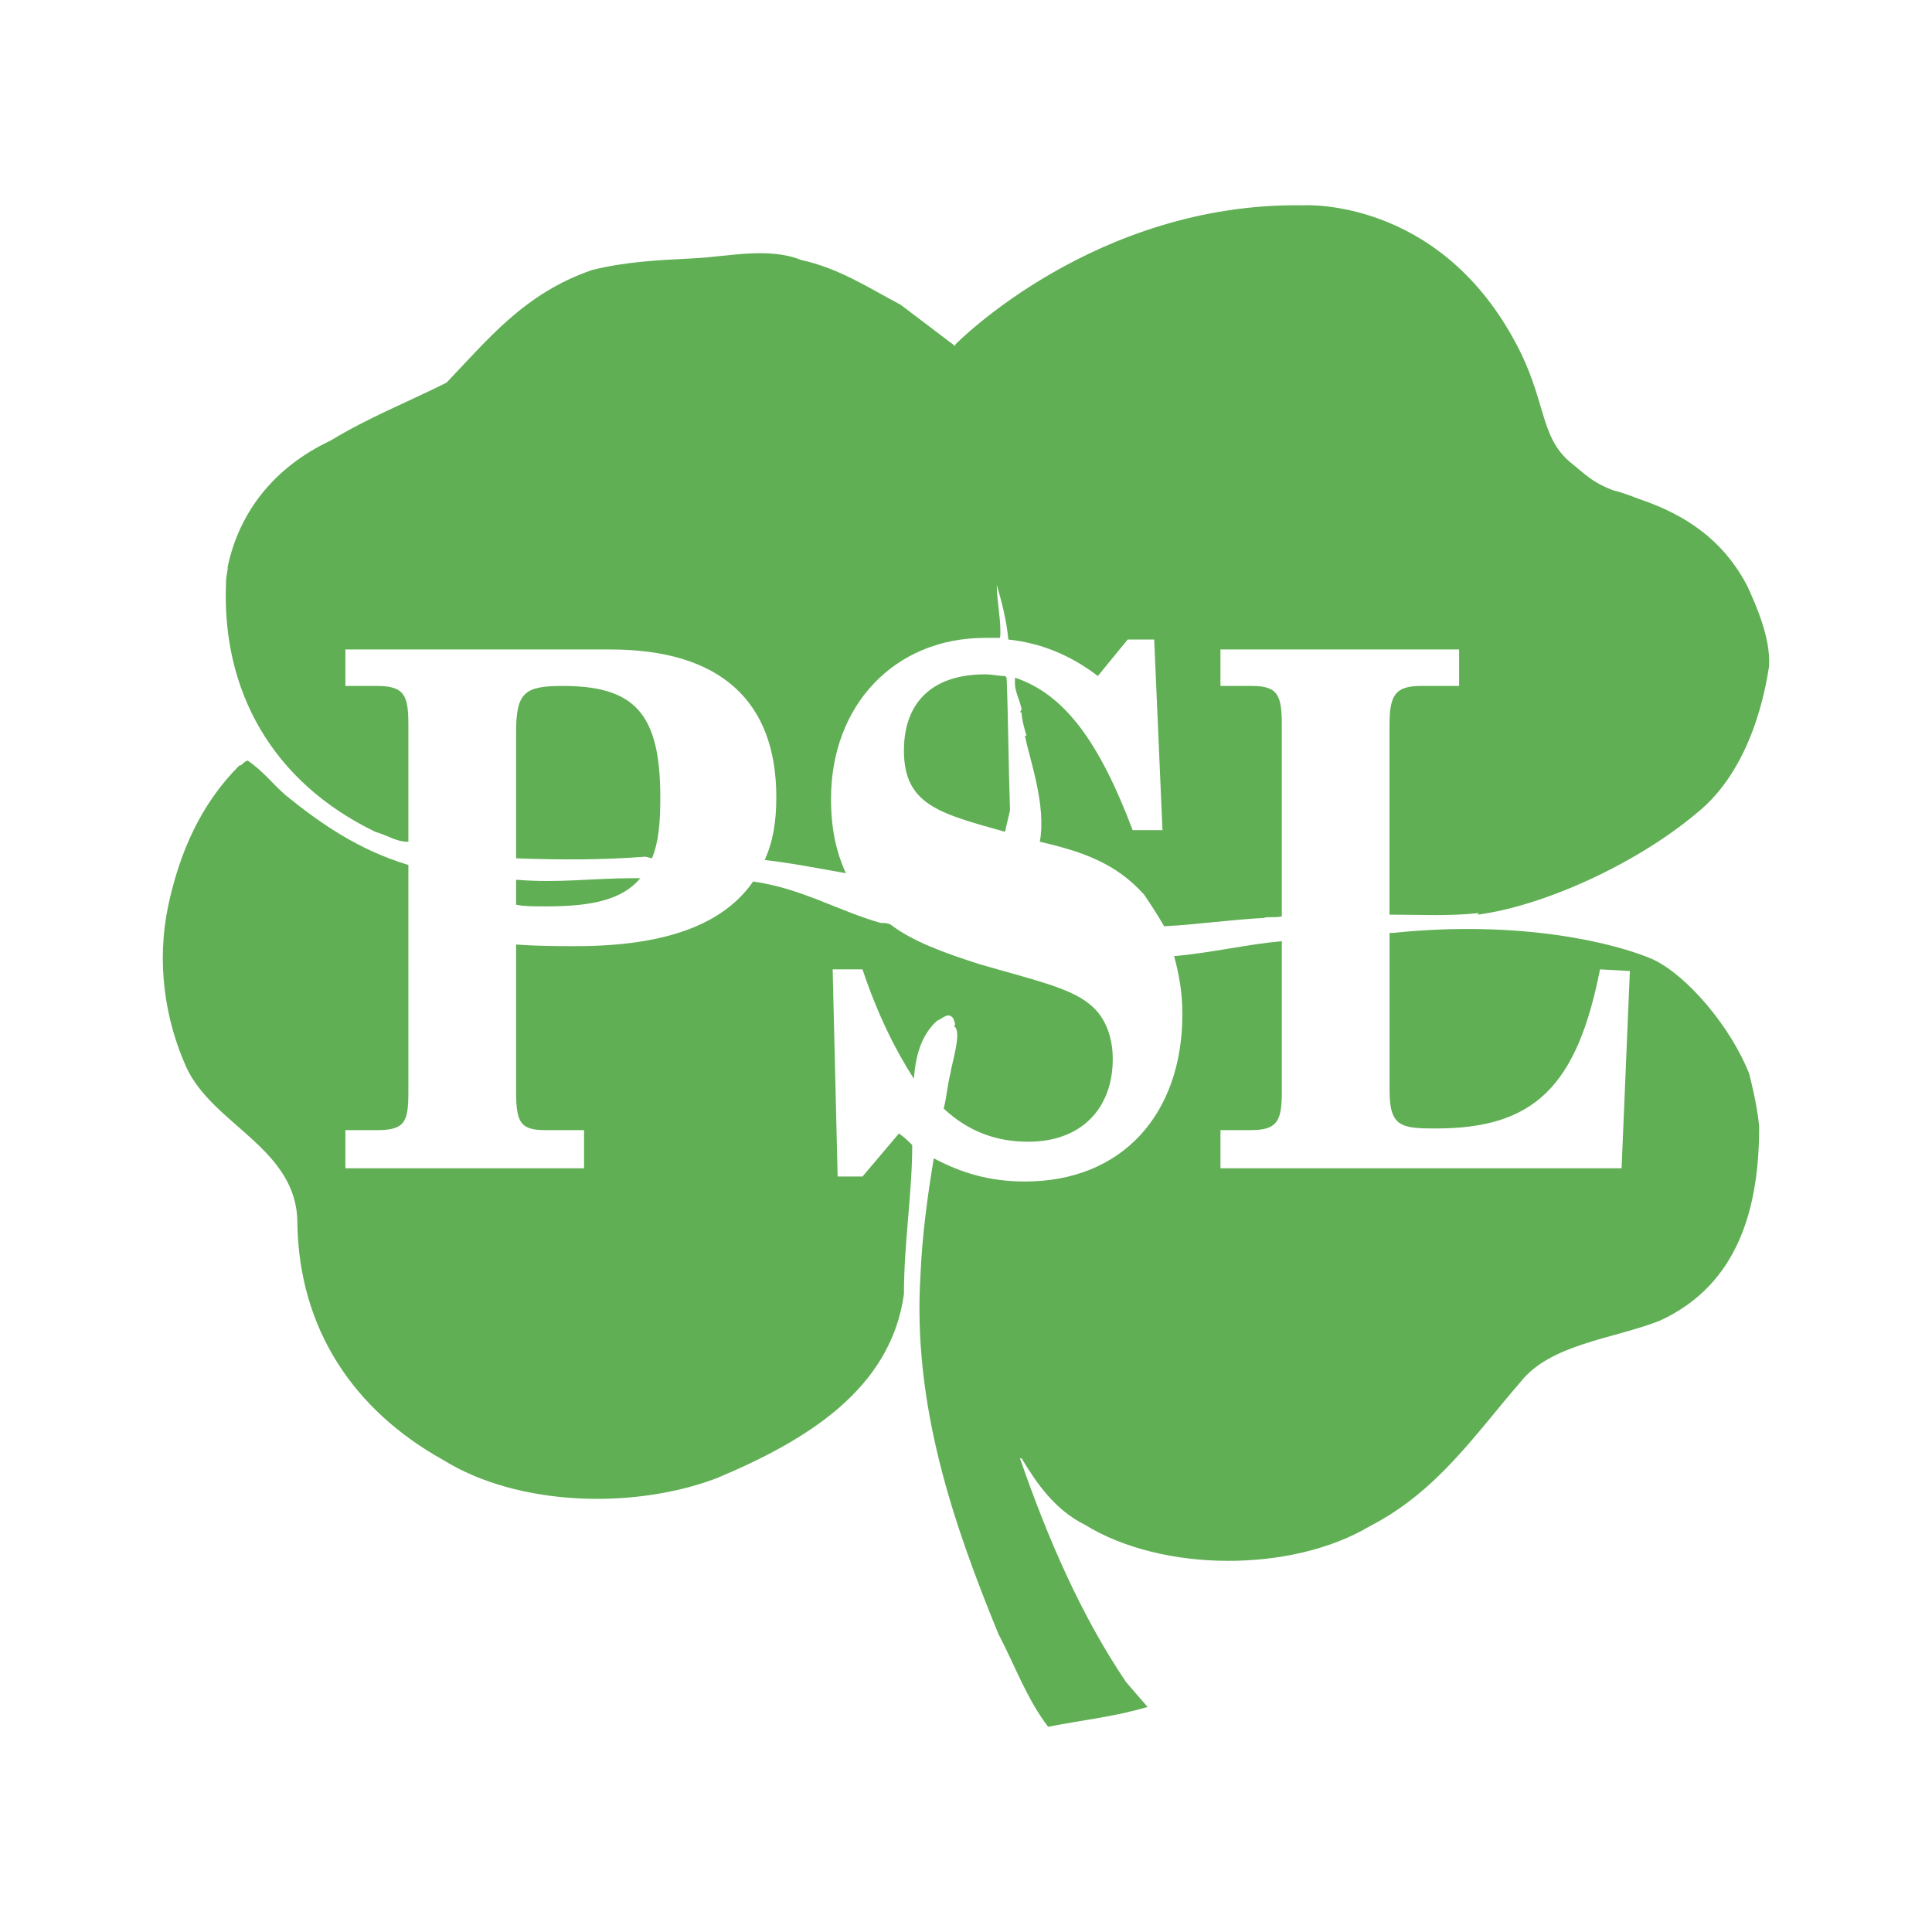 PSL – Peshawar Zalmi logo colors